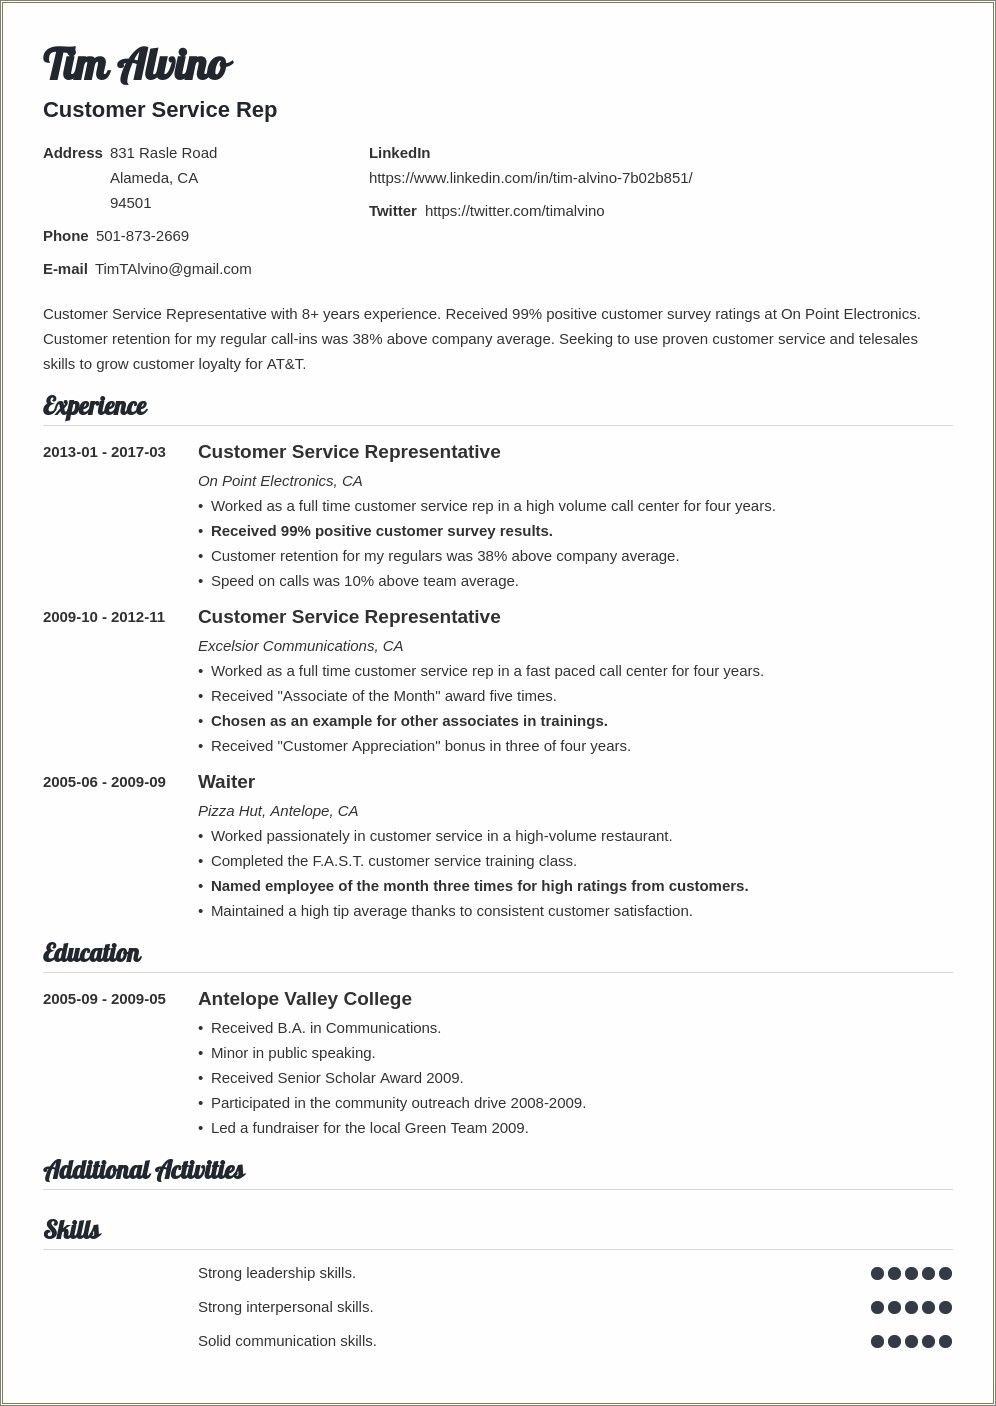 Resume Profile Summary For Customer Service